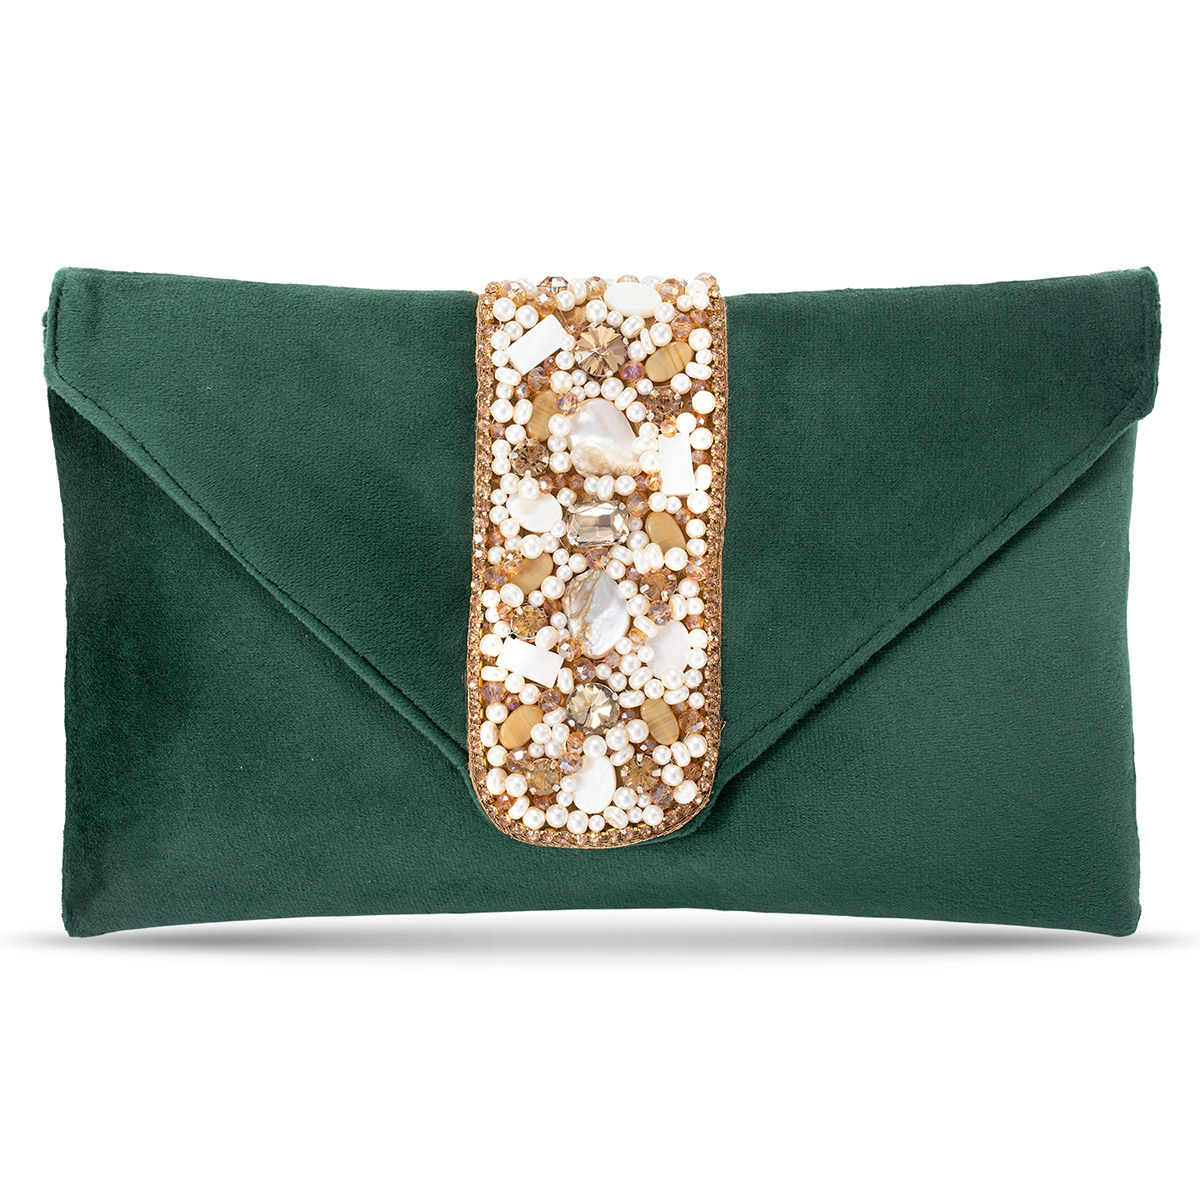 White golden Embellished clutch/purse | dubizzle